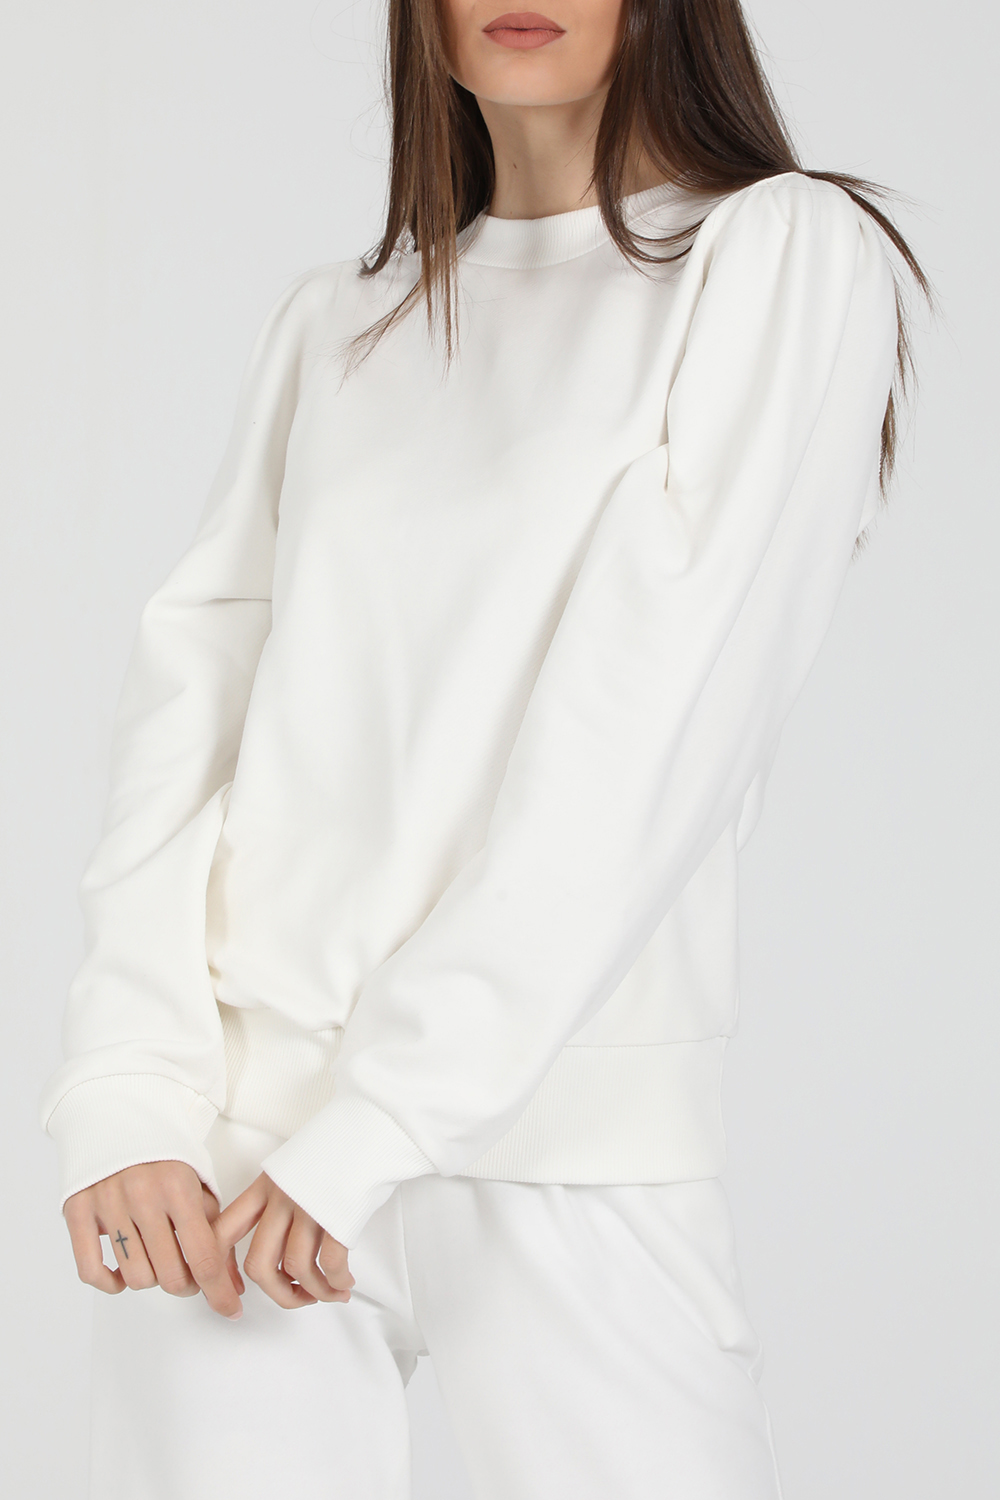 LA DOLLS – Γυναικεία φούτερ μπλούζα LA DOLLS SOPHIE λευκή 1820917.0-0090